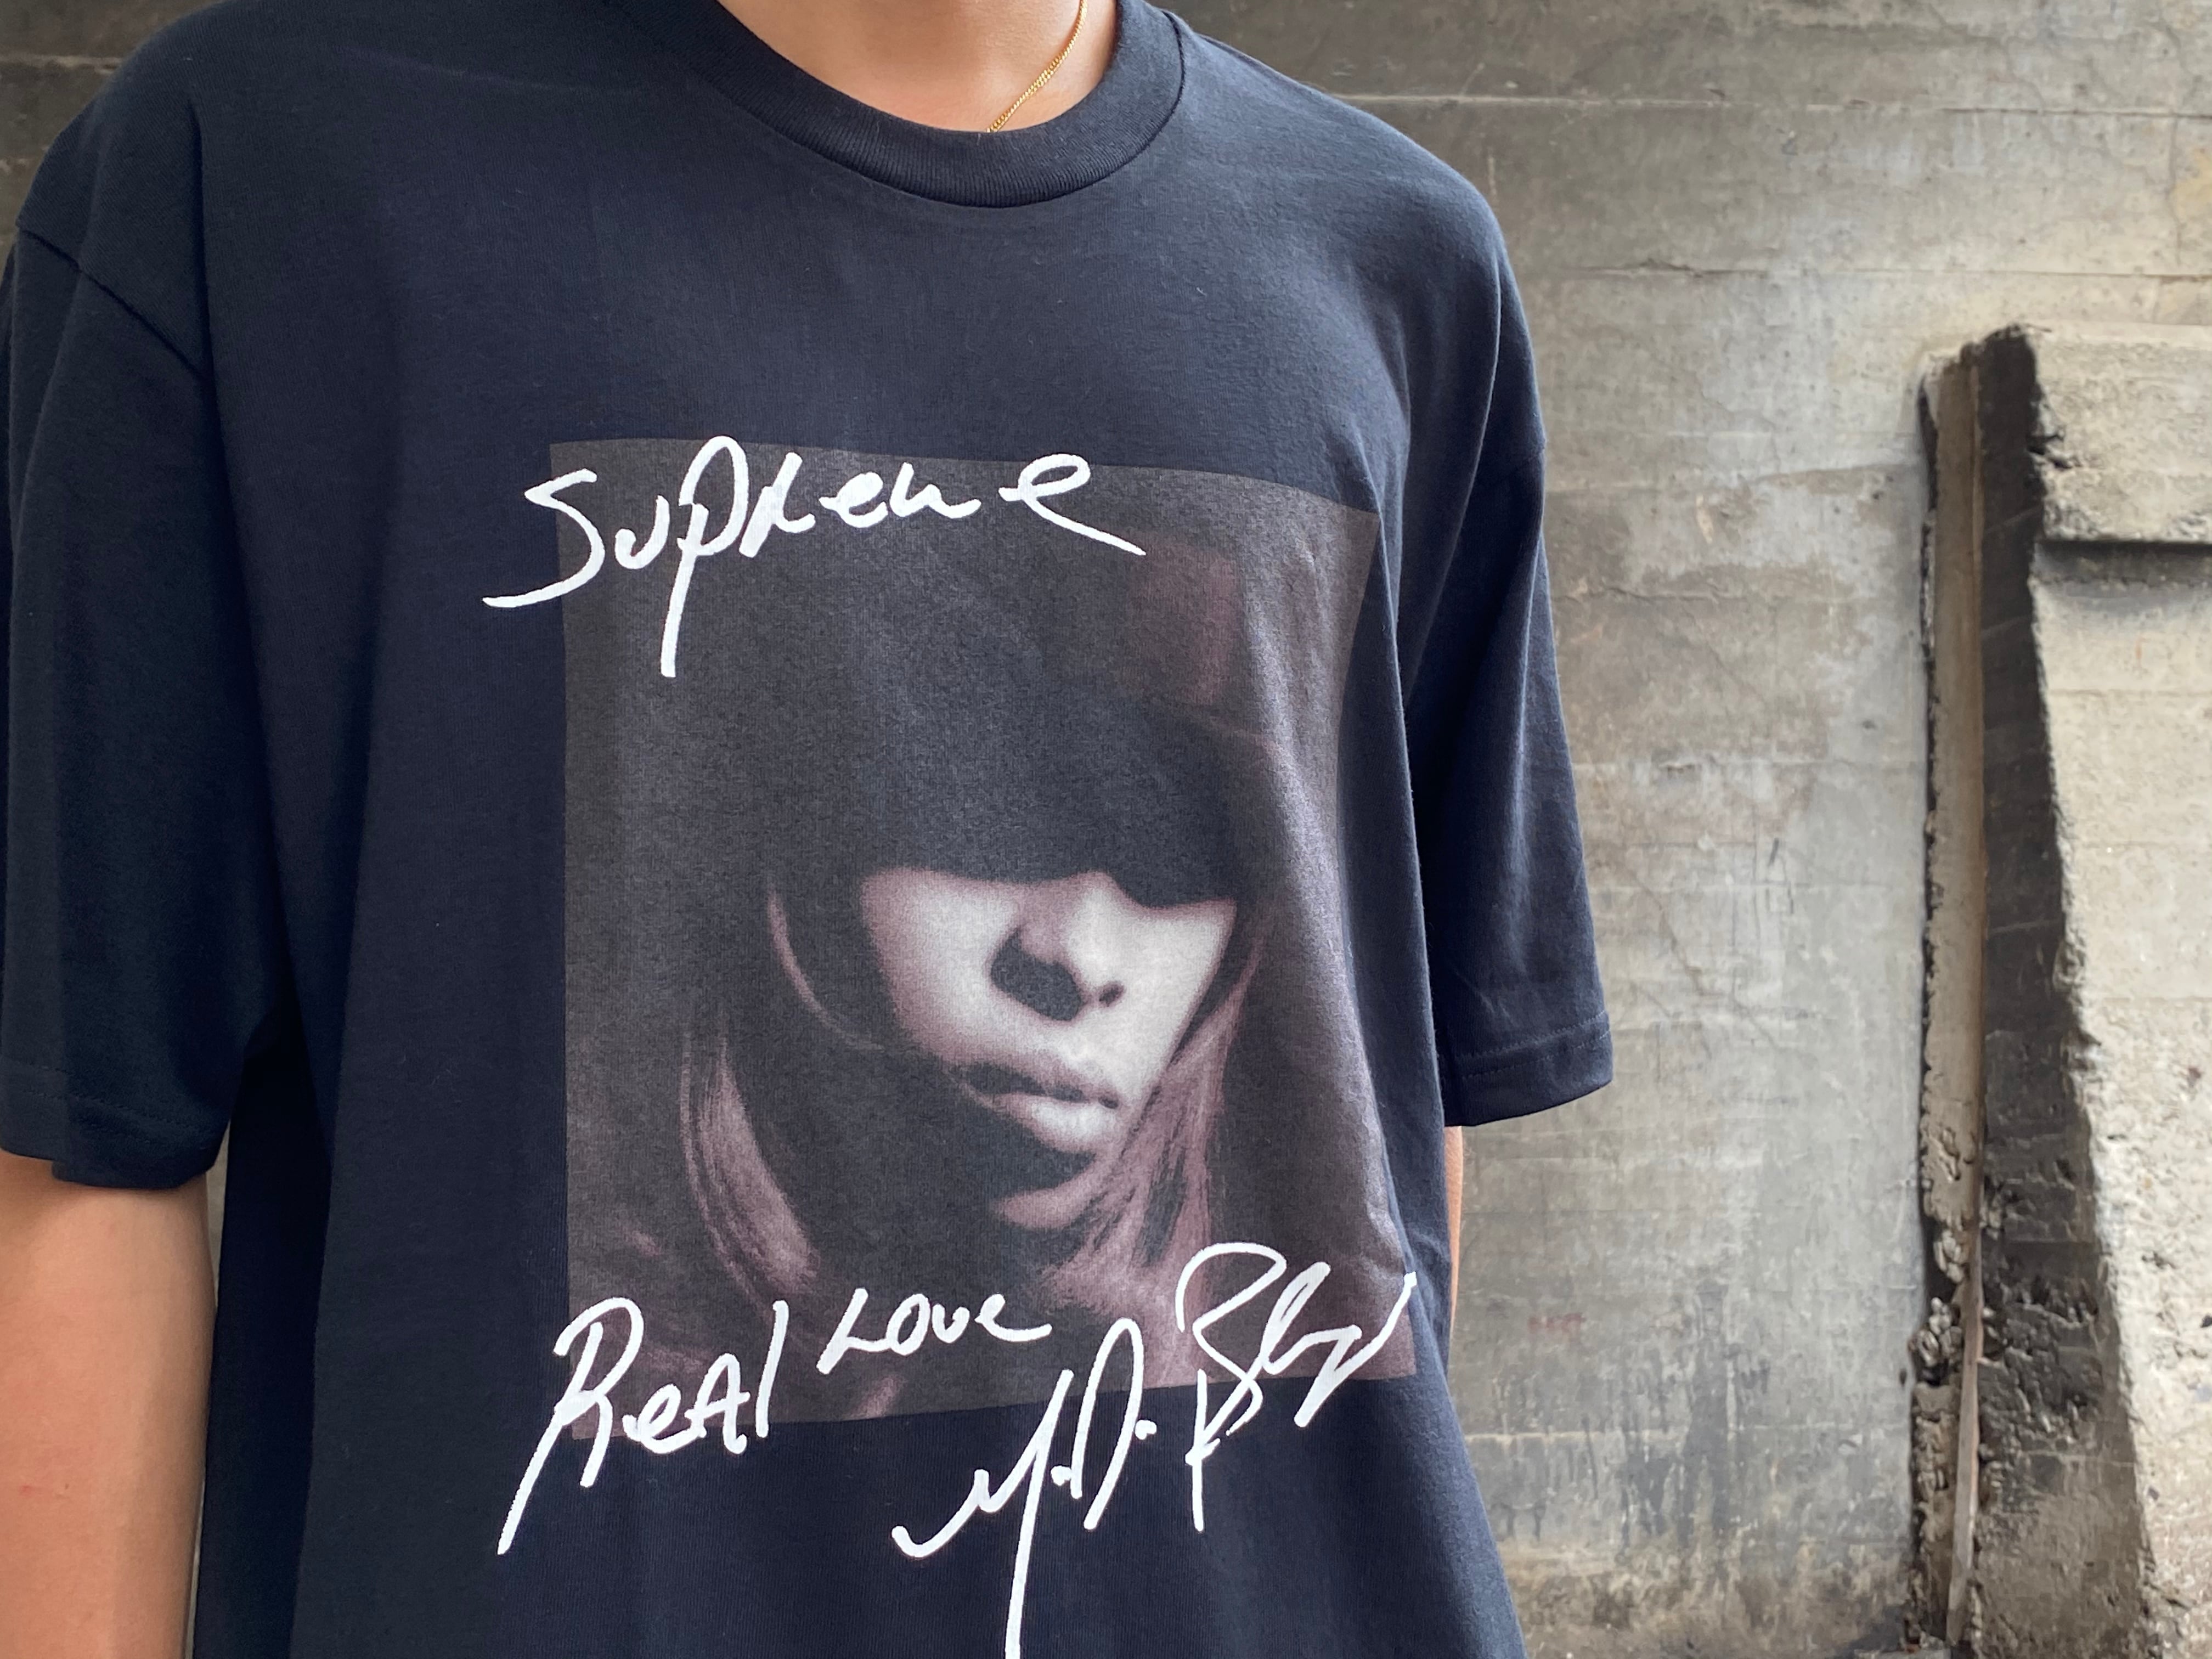 Supreme Mary J. Blige Tee black Lサイズ